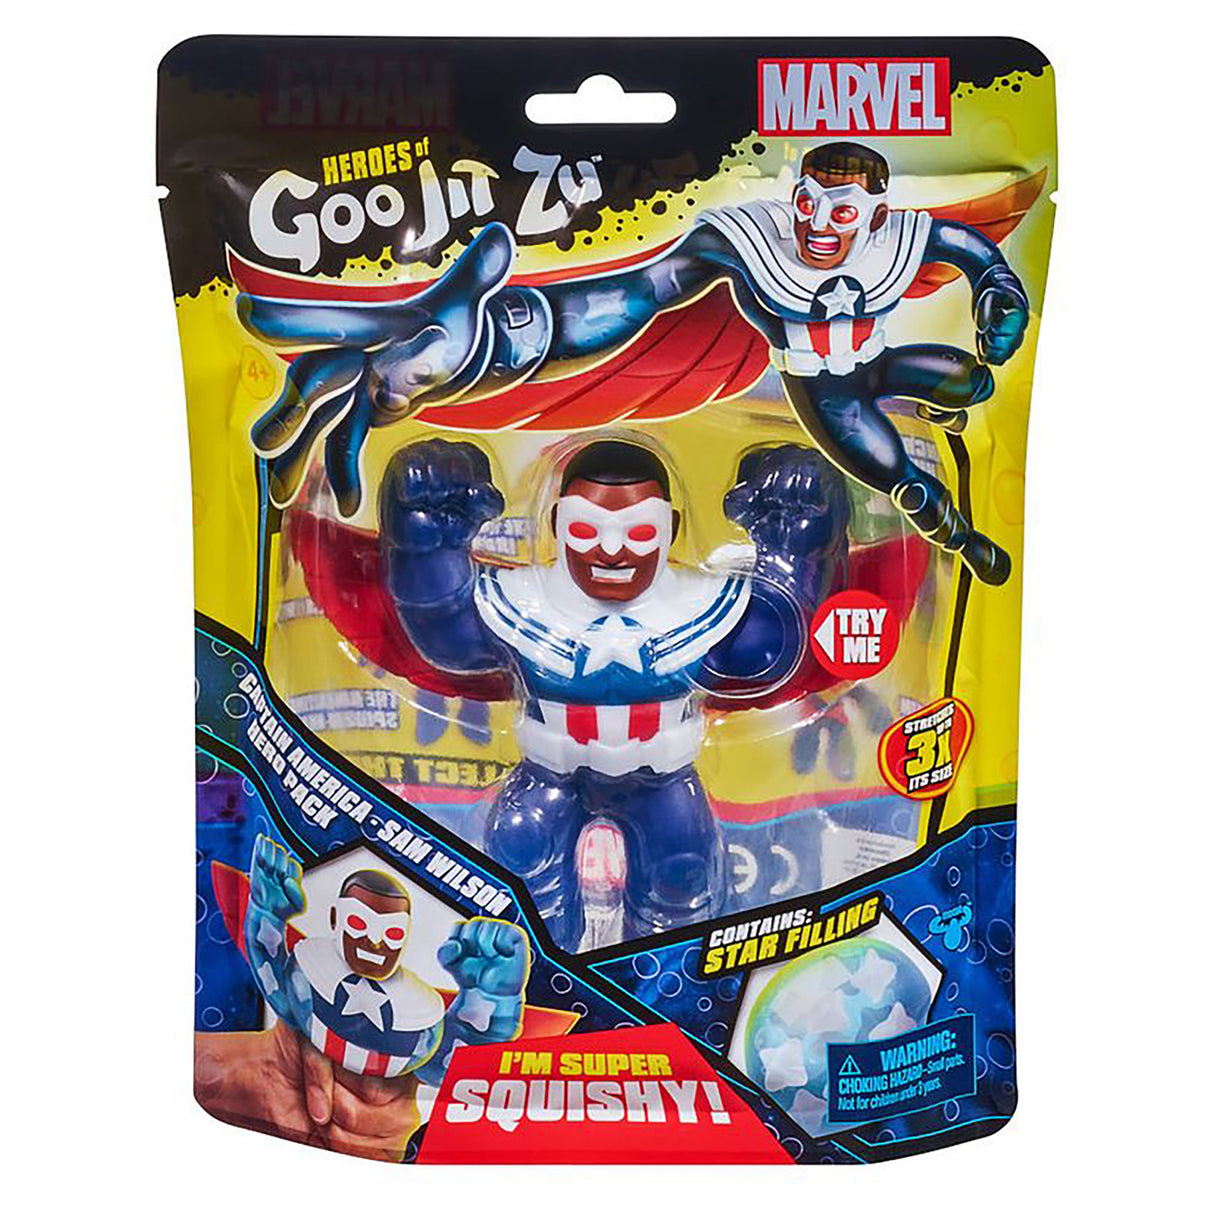 Heroes of Goo Jit Zu Marvel Captain America - Sam Wilson Hero Pack